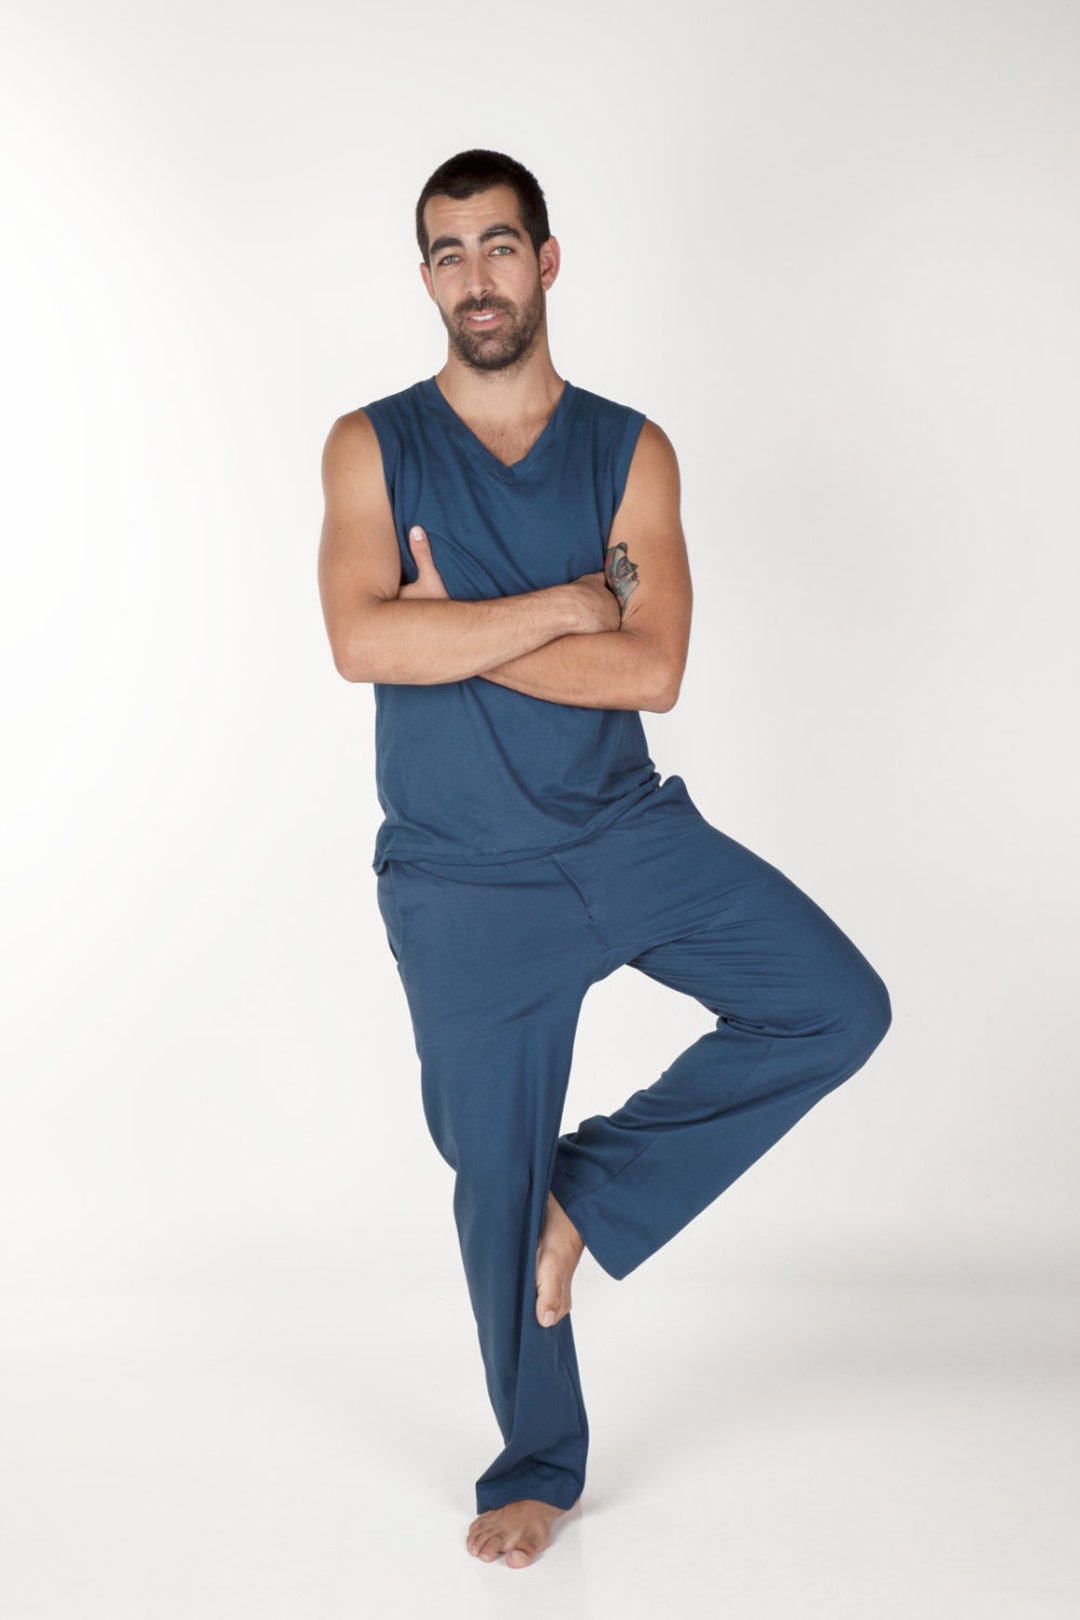 Hanuman Trousers Deep Blue and Charcoal Color Options. Extreme Comfort,  Natural 100% Cotton, Men's Trousers for Active Lifefestyle -  Australia